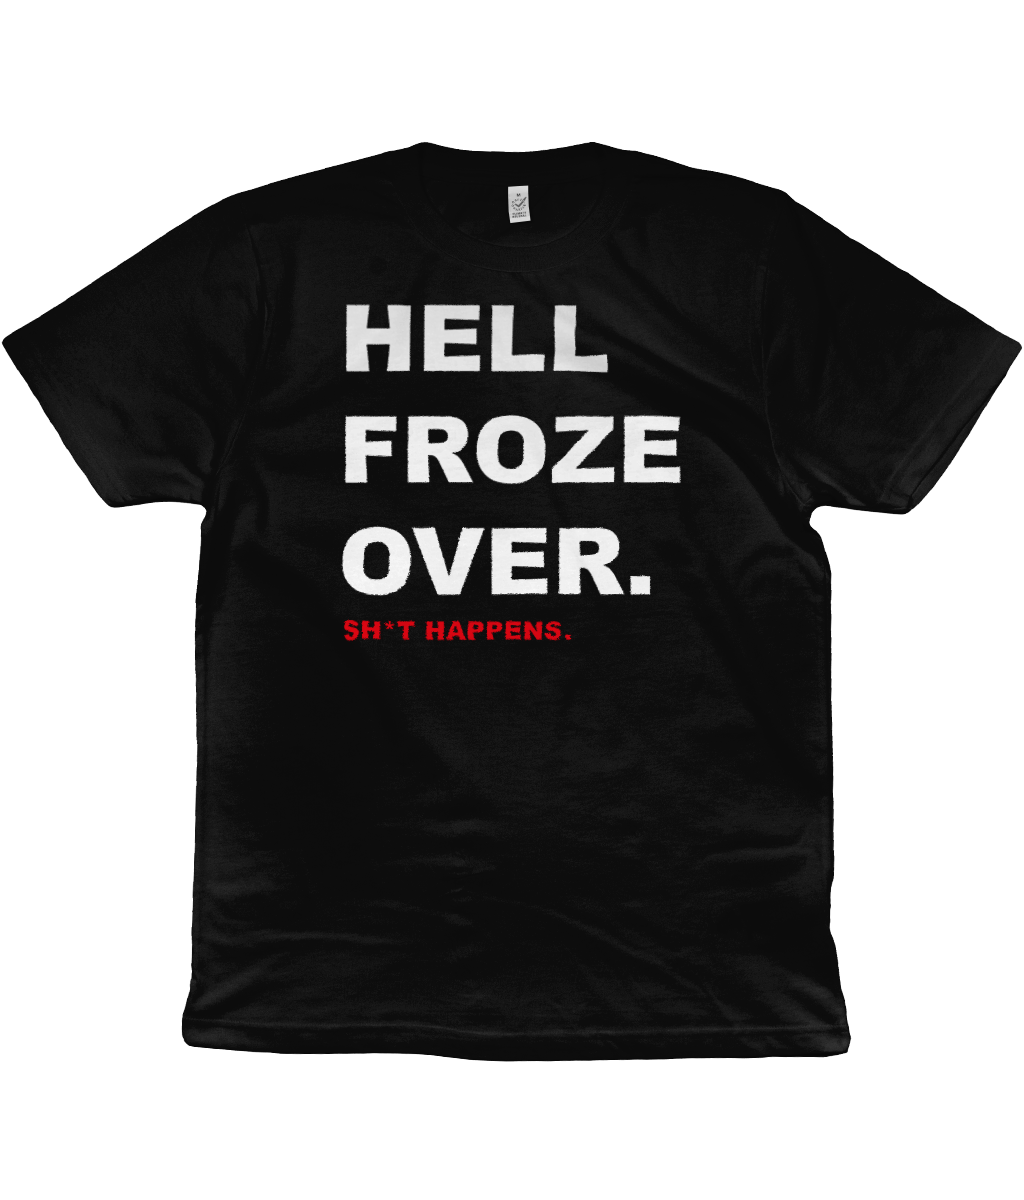 Unisex 'Hell Froze Over' Tee (Black)